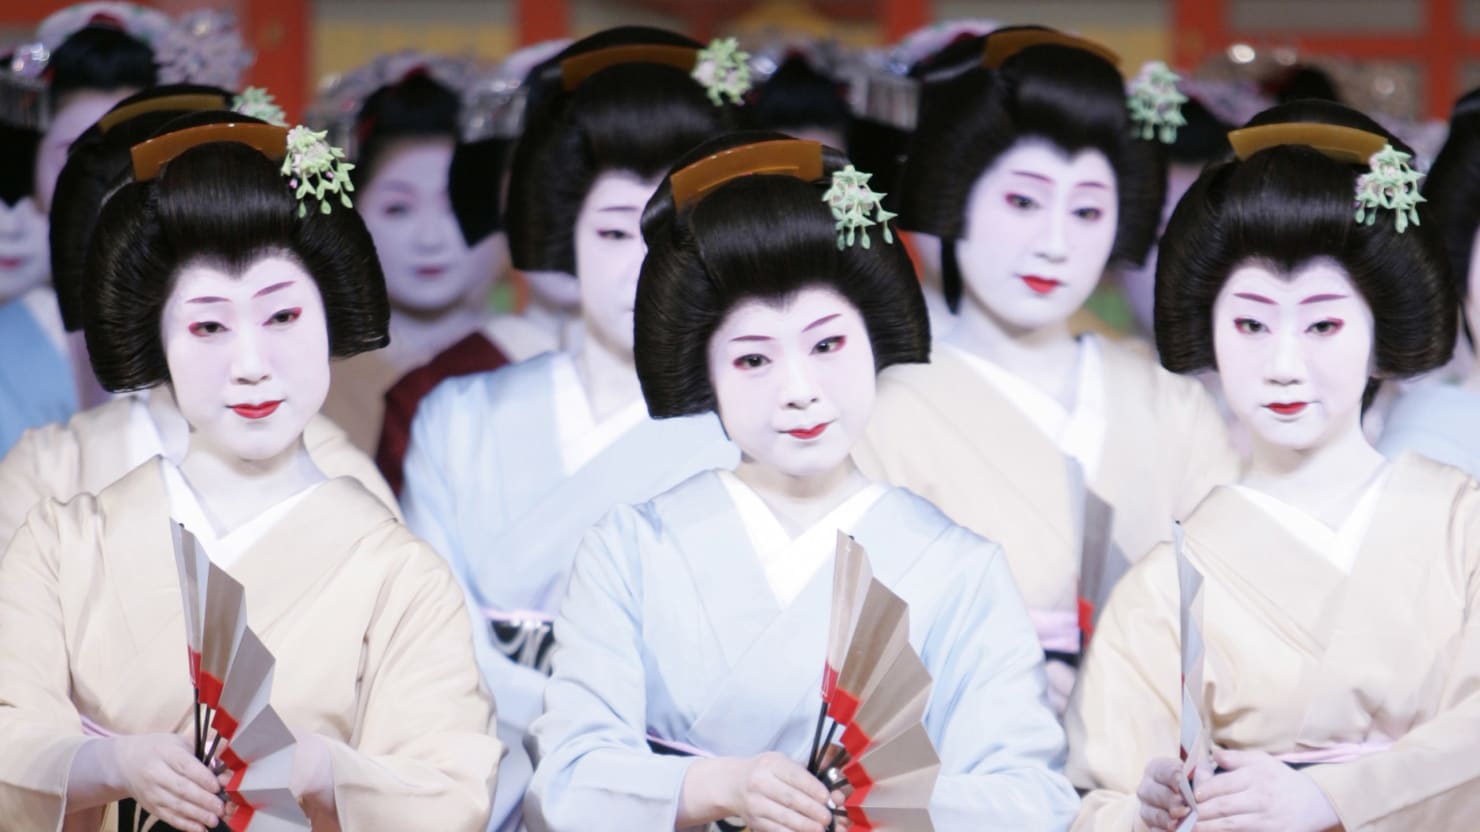 japan geisha married me Adult Pics Hq